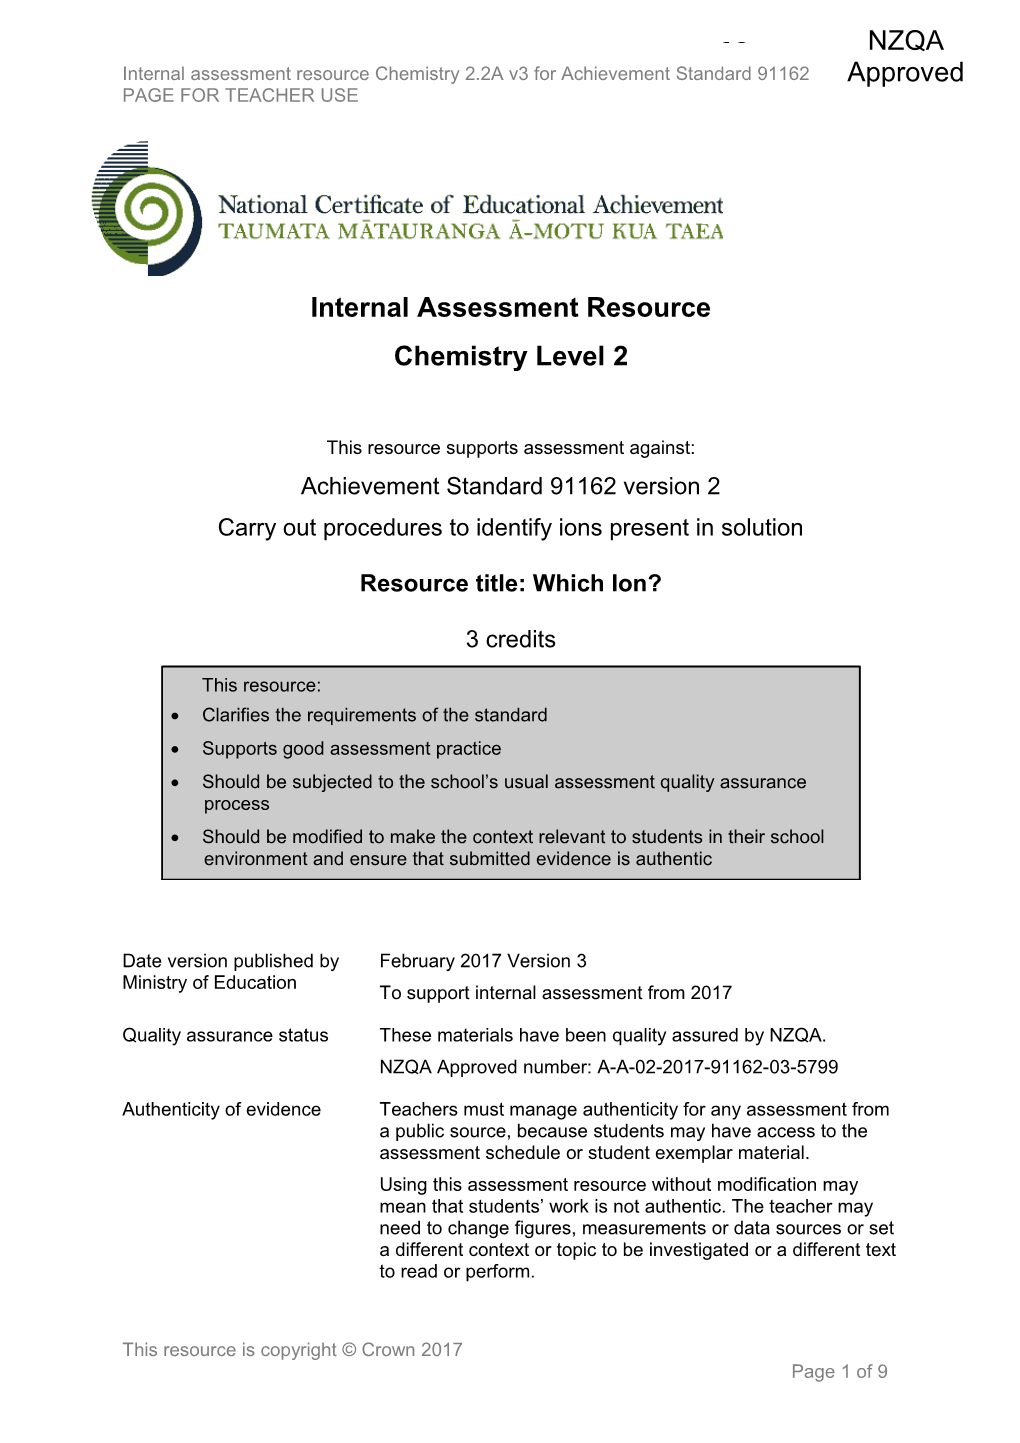 Level 2 Chemistry Internal Assessment Resource